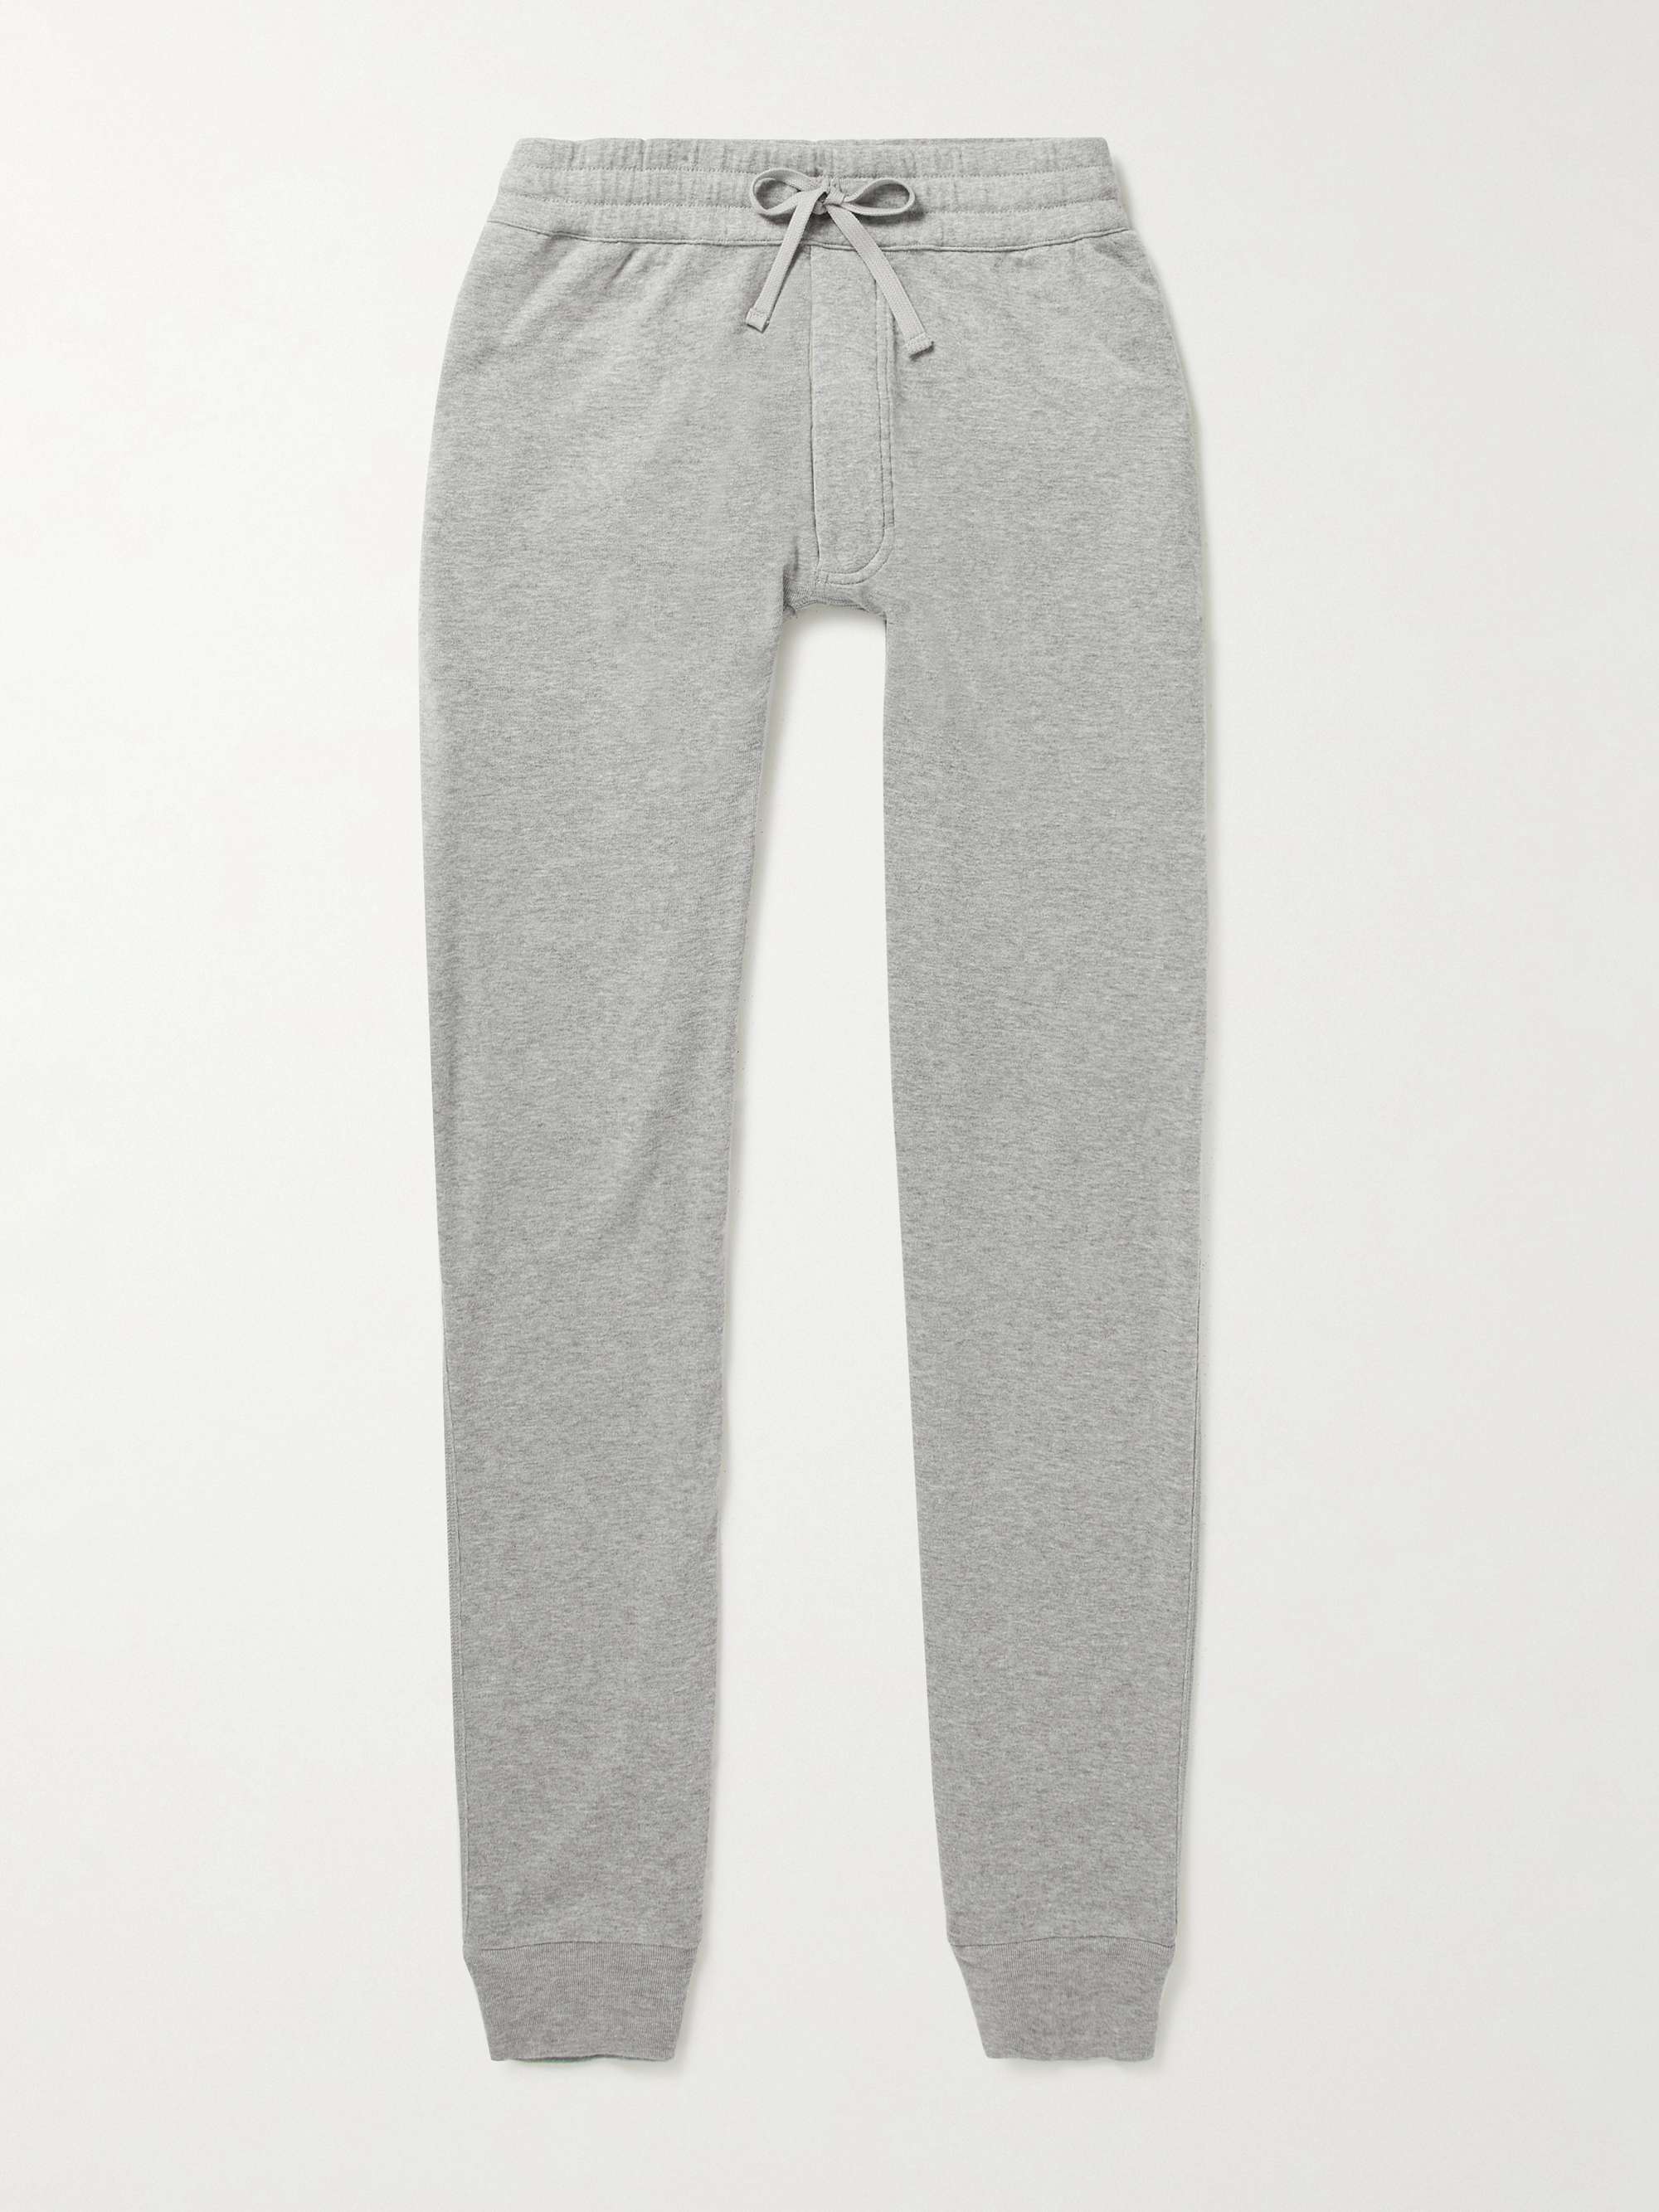 TOM FORD Tapered Brushed Cotton and Modal-Blend Jersey Sweatpants for Men |  MR PORTER